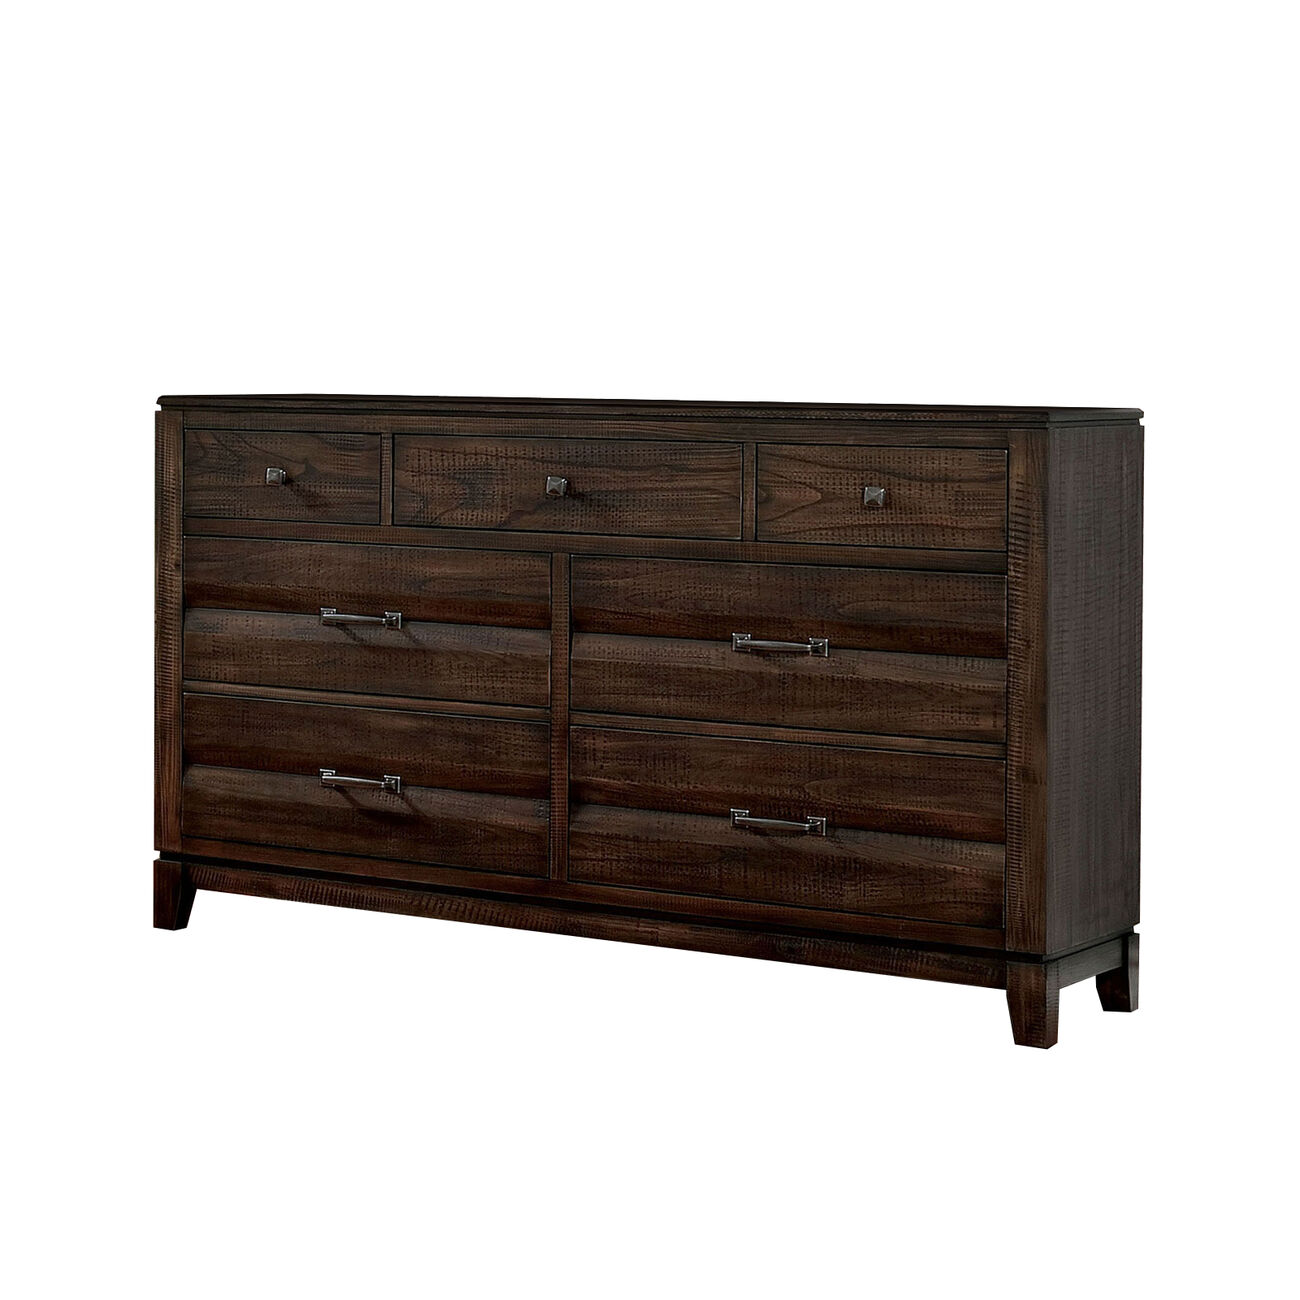 7 Drawer Wooden Dresser with Rough Hewn Texture detail, Brown